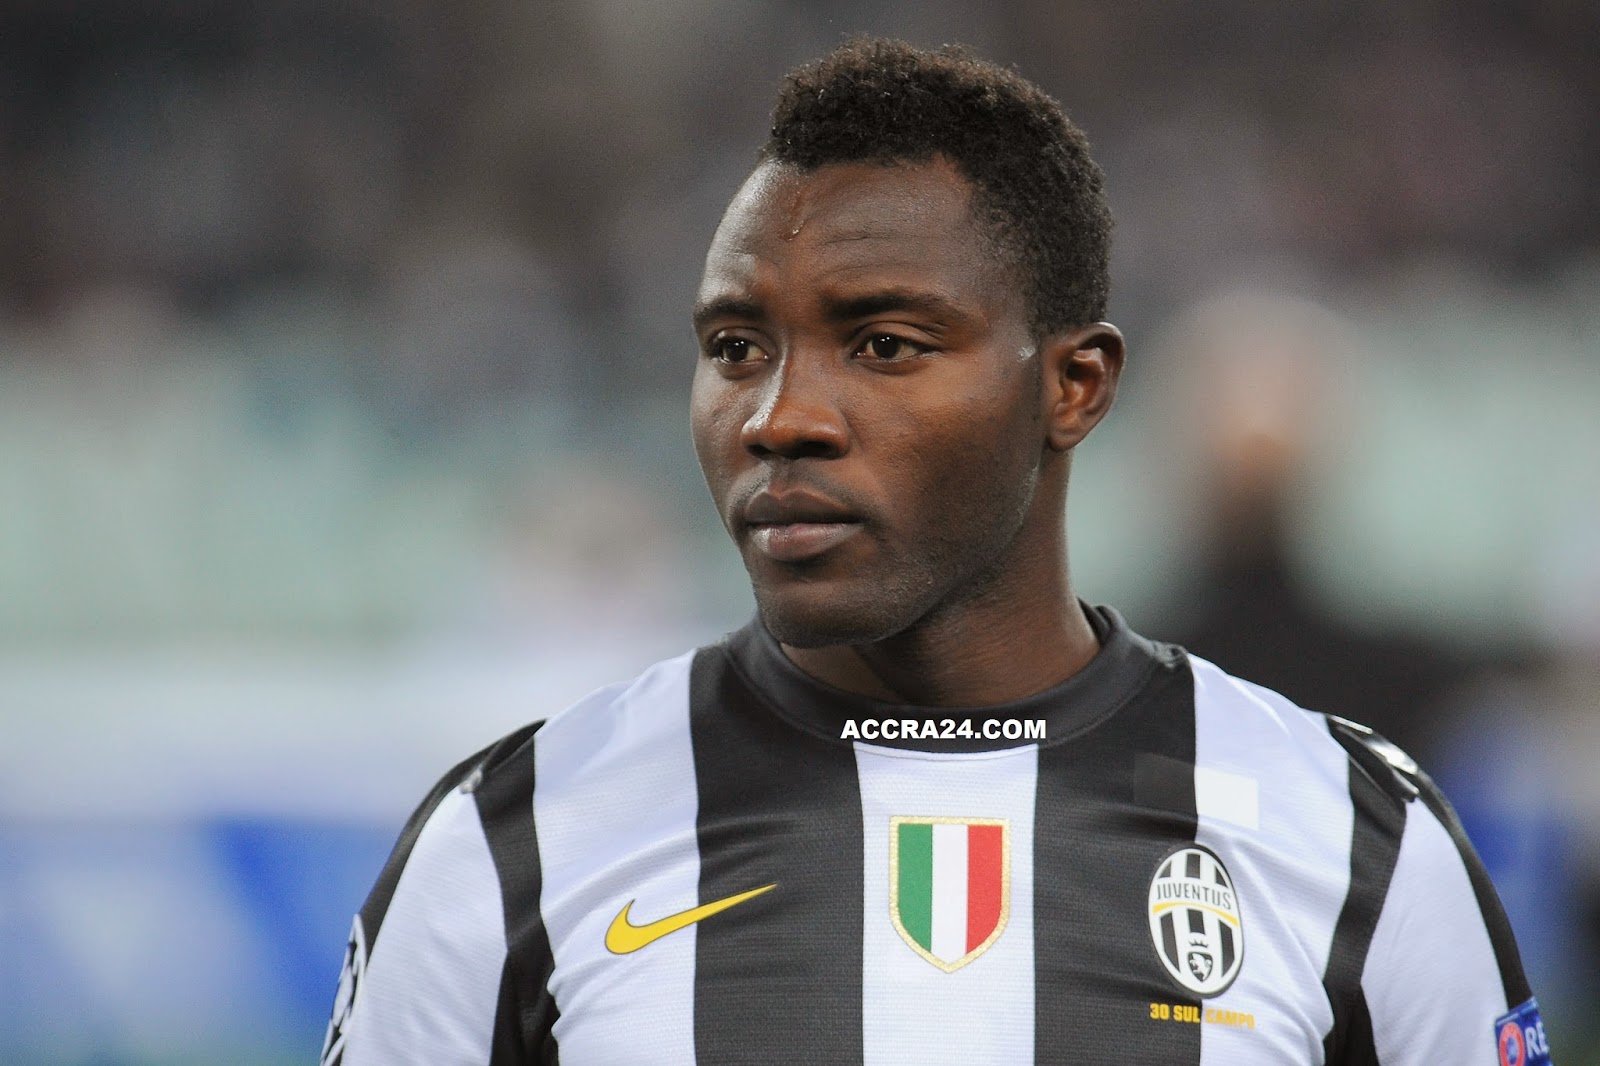 Kwadwo Asamoah - Ghanaian Footballer who plays for Italian club Juventus